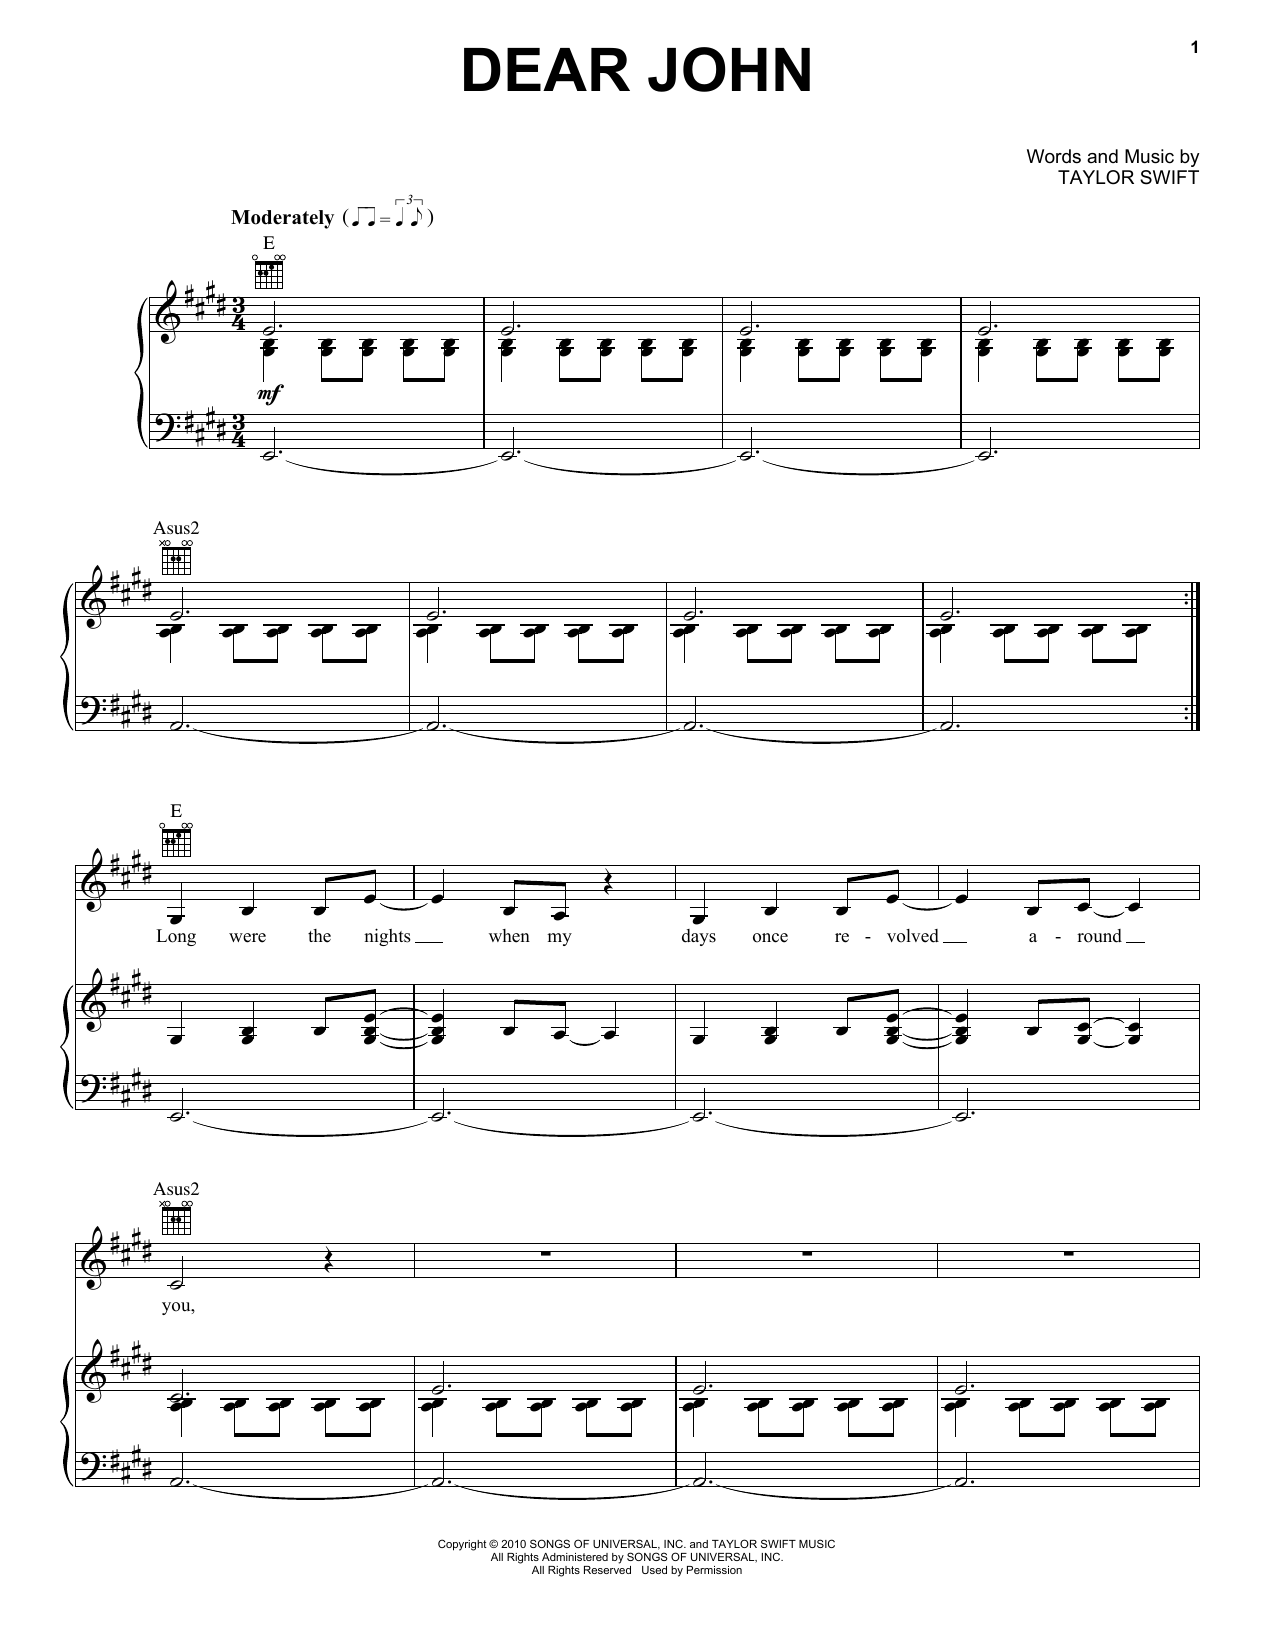 Taylor Swift Dear John Sheet Music Notes & Chords for Guitar Tab - Download or Print PDF